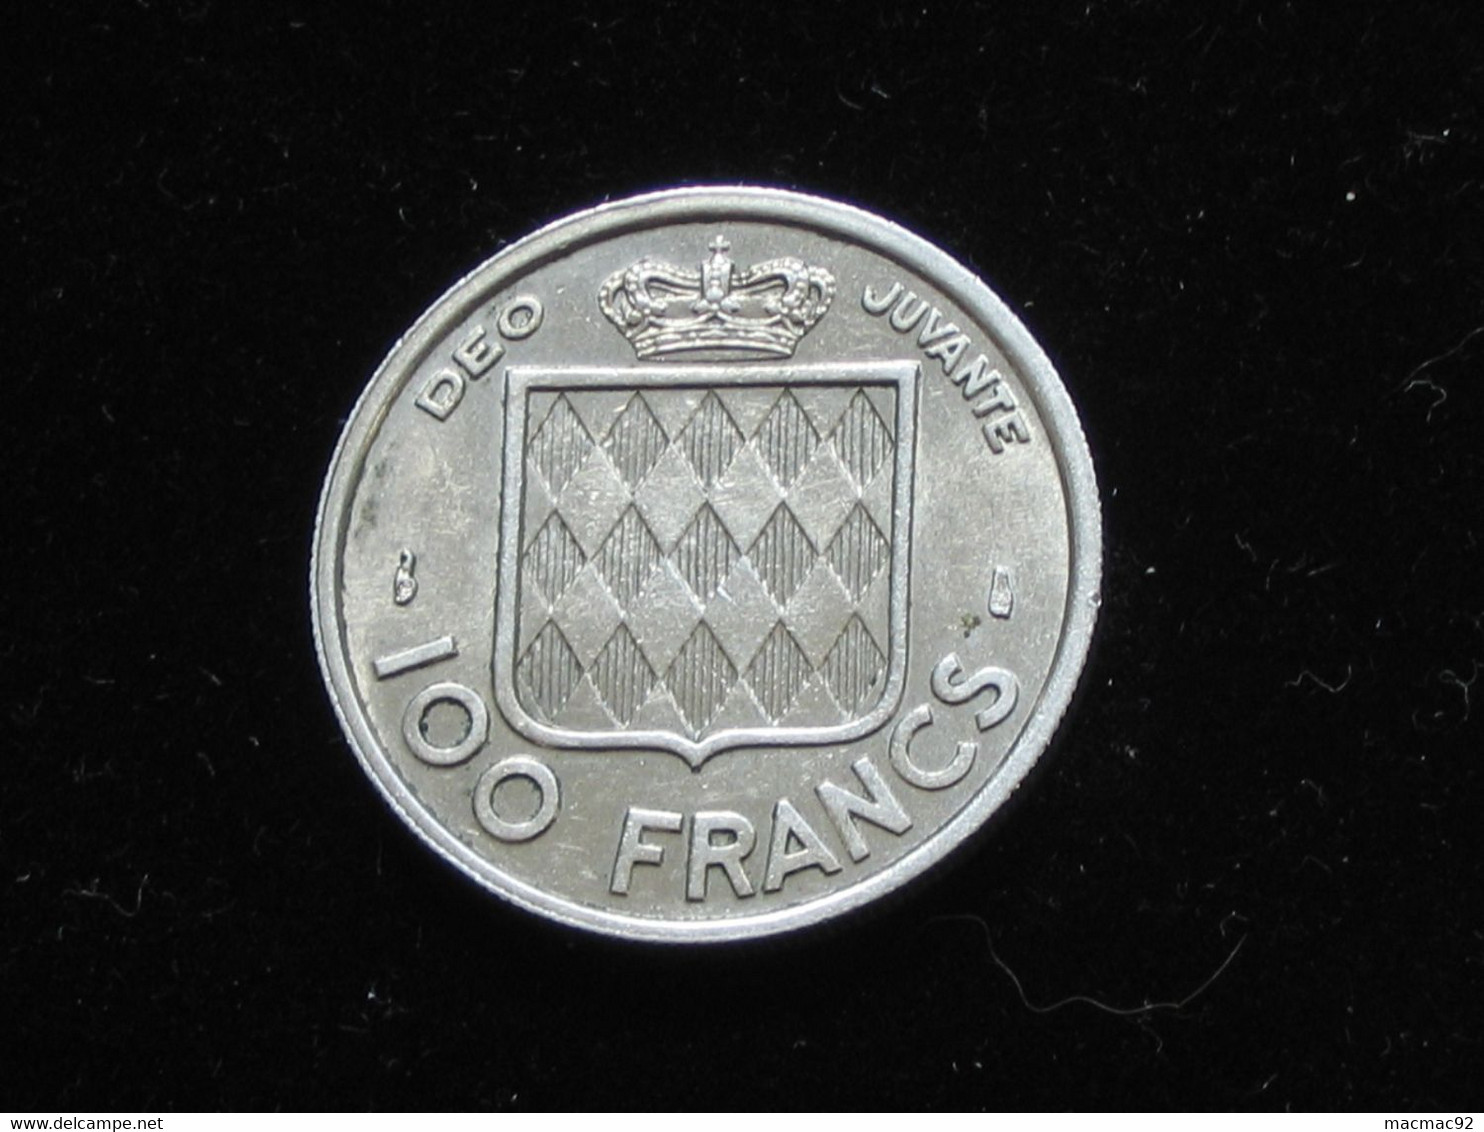 MONACO - 100 Frs 1956 - Rainier III Prince De Monaco **** EN ACHAT IMMEDIAT **** - 1949-1956 Anciens Francs